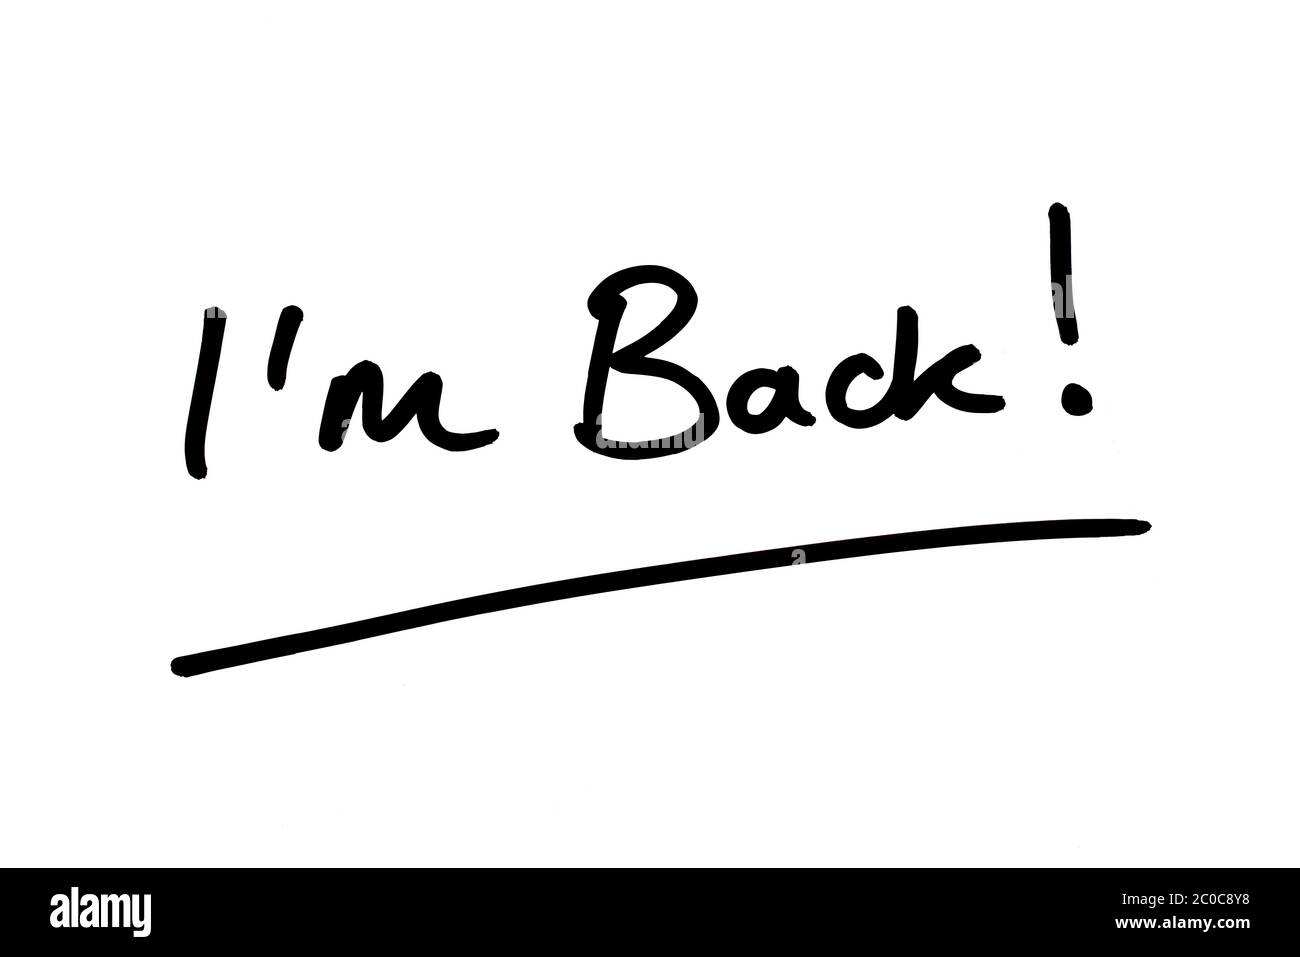 Im Back! handwritten on a white background. Stock Photo